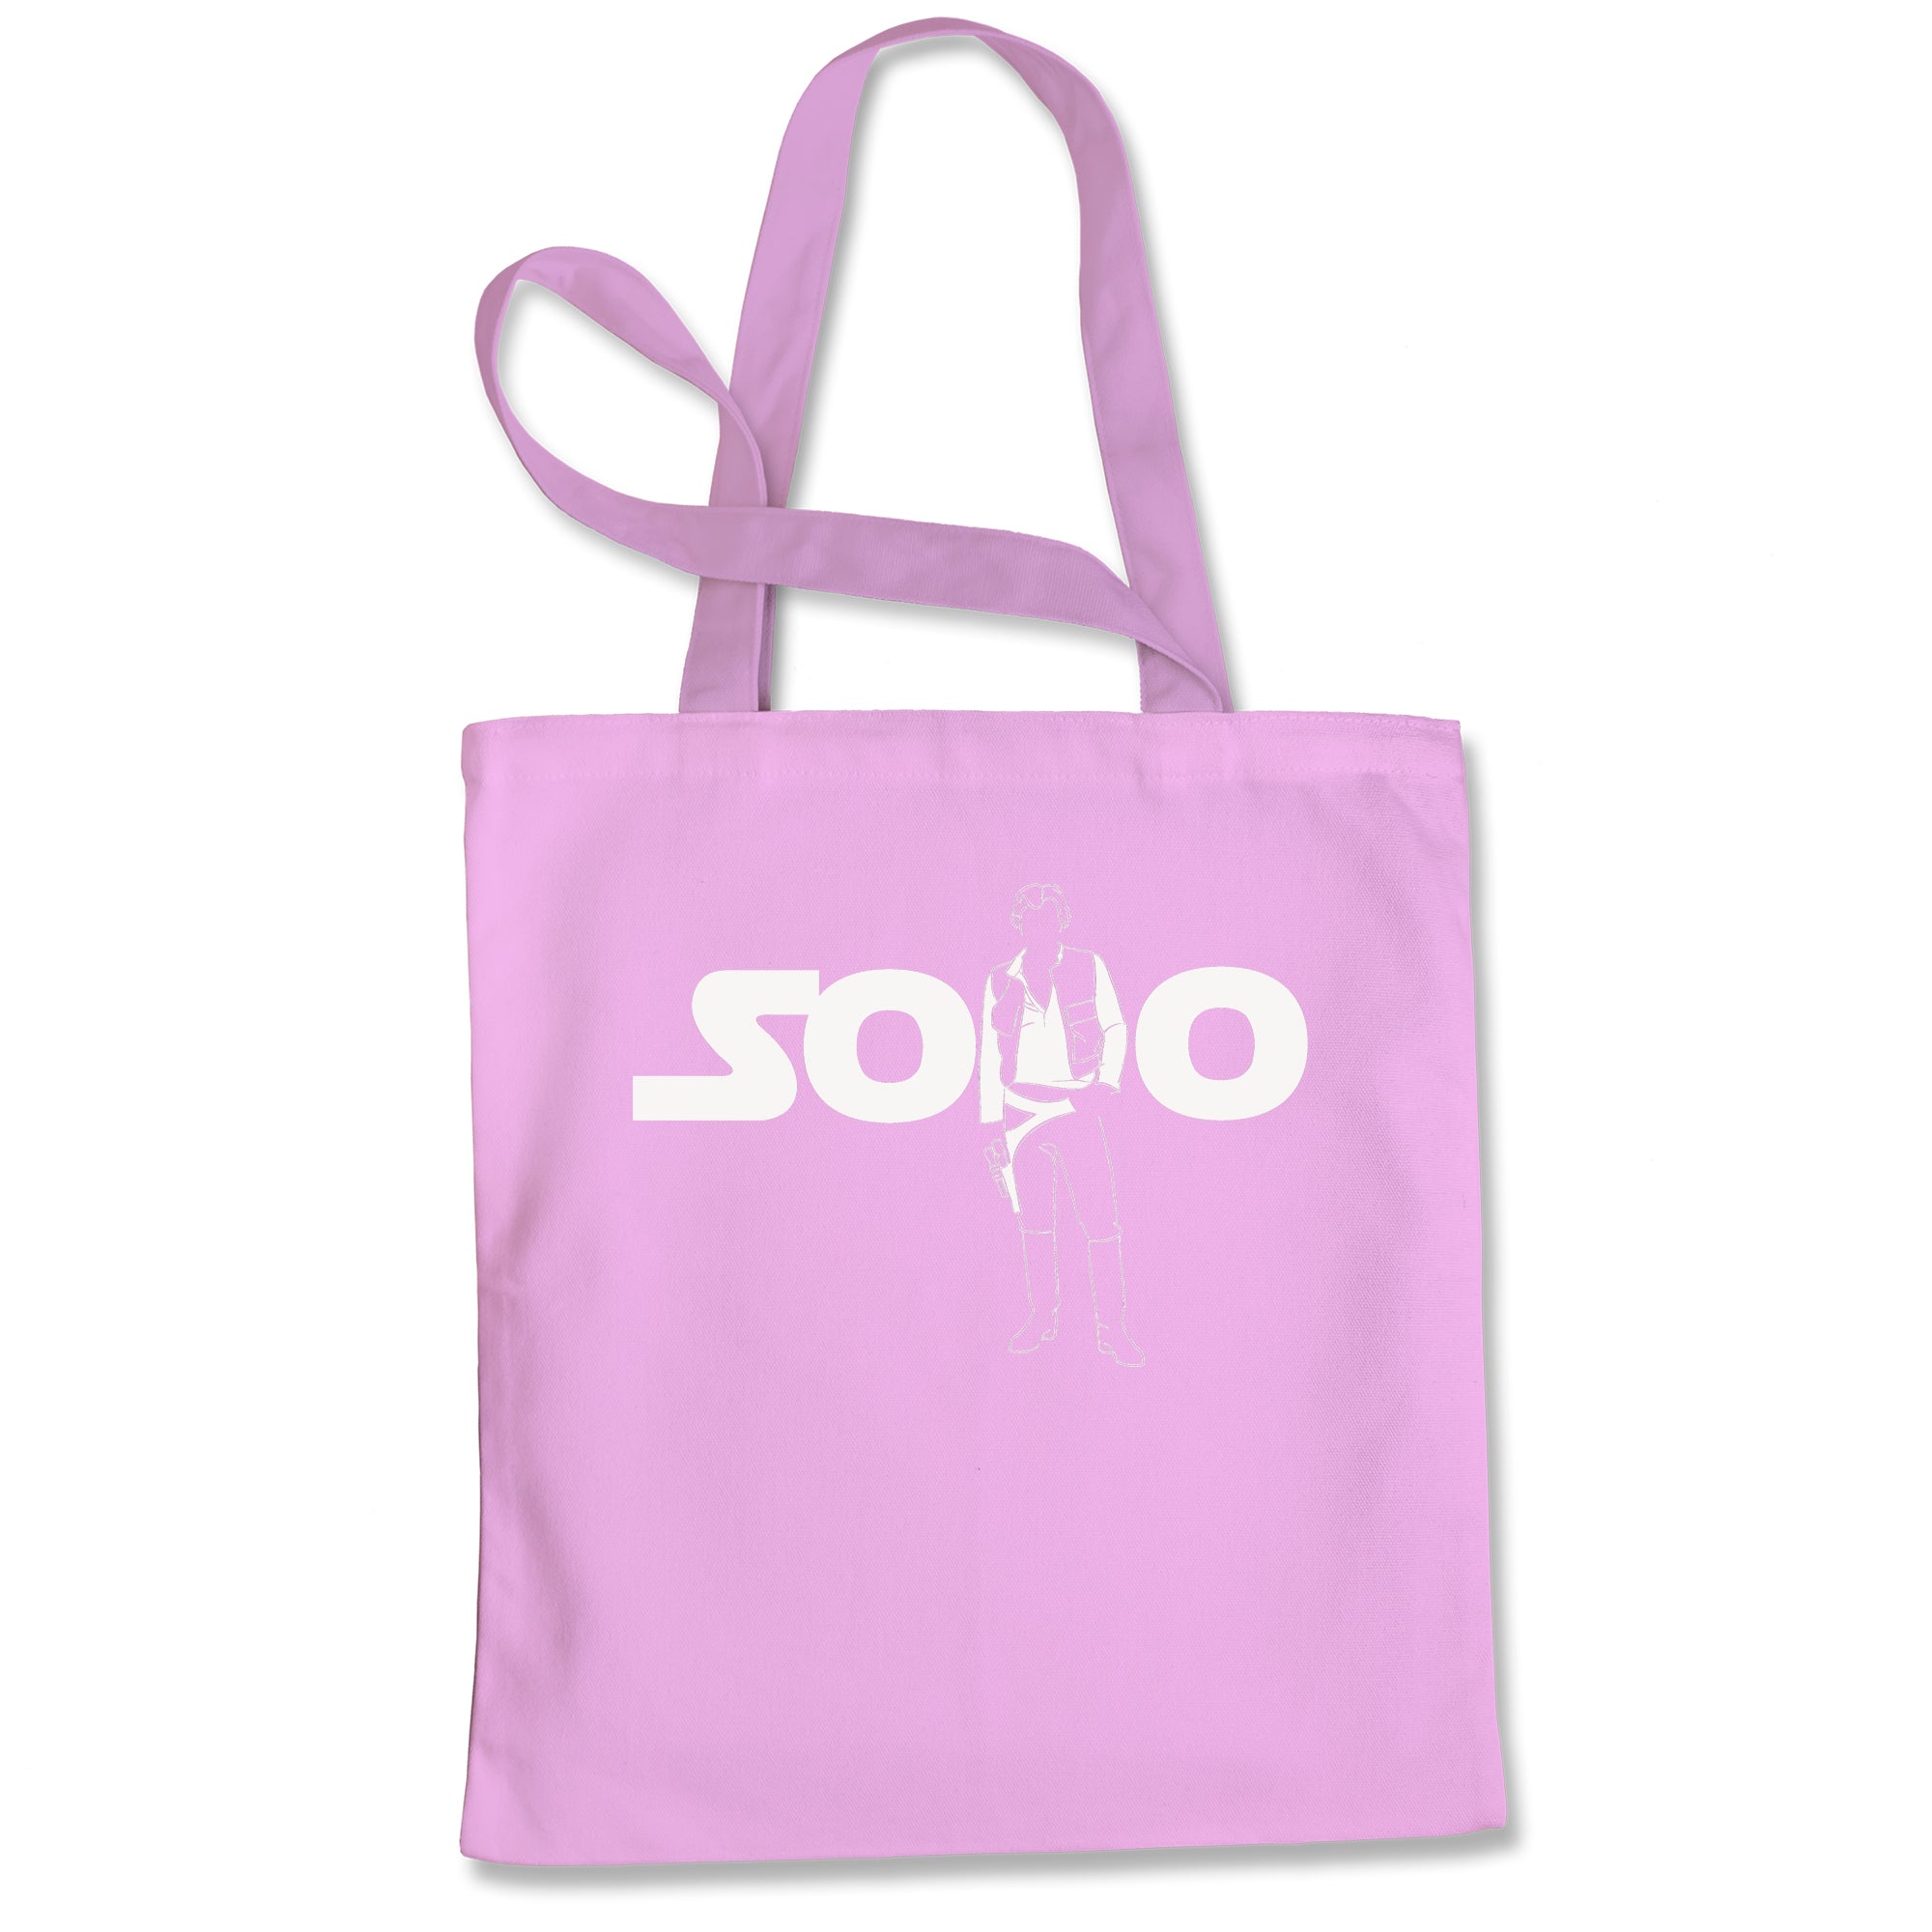 Solo Star Hand Tote Bag